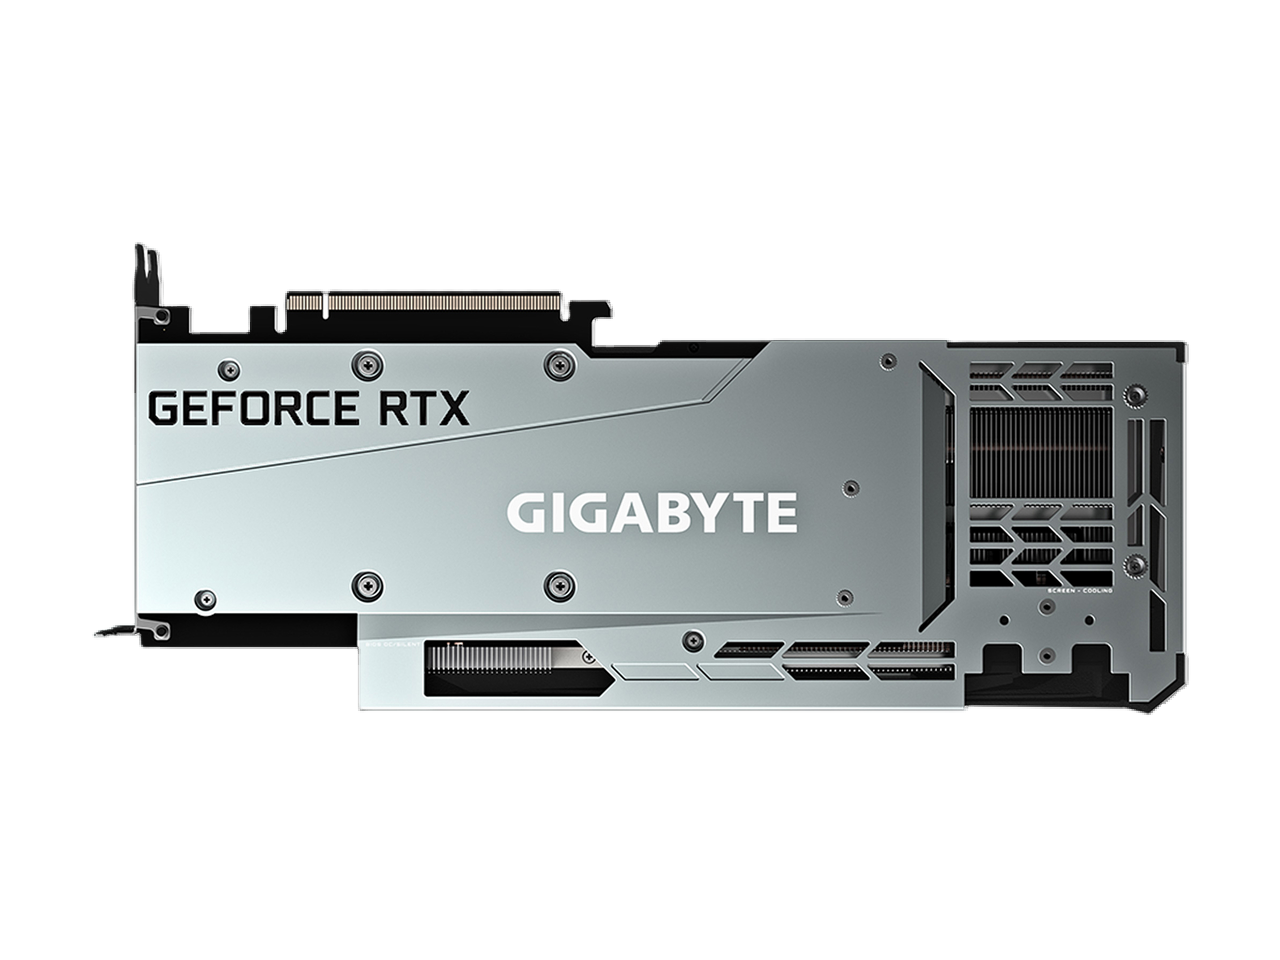 GIGABYTE Gaming OC GeForce RTX 3080 10GB GDDR6X PCI Express 4.0 ATX Video Card GV-N3080GAMING OC-10GD (rev. 2.0) (LHR)